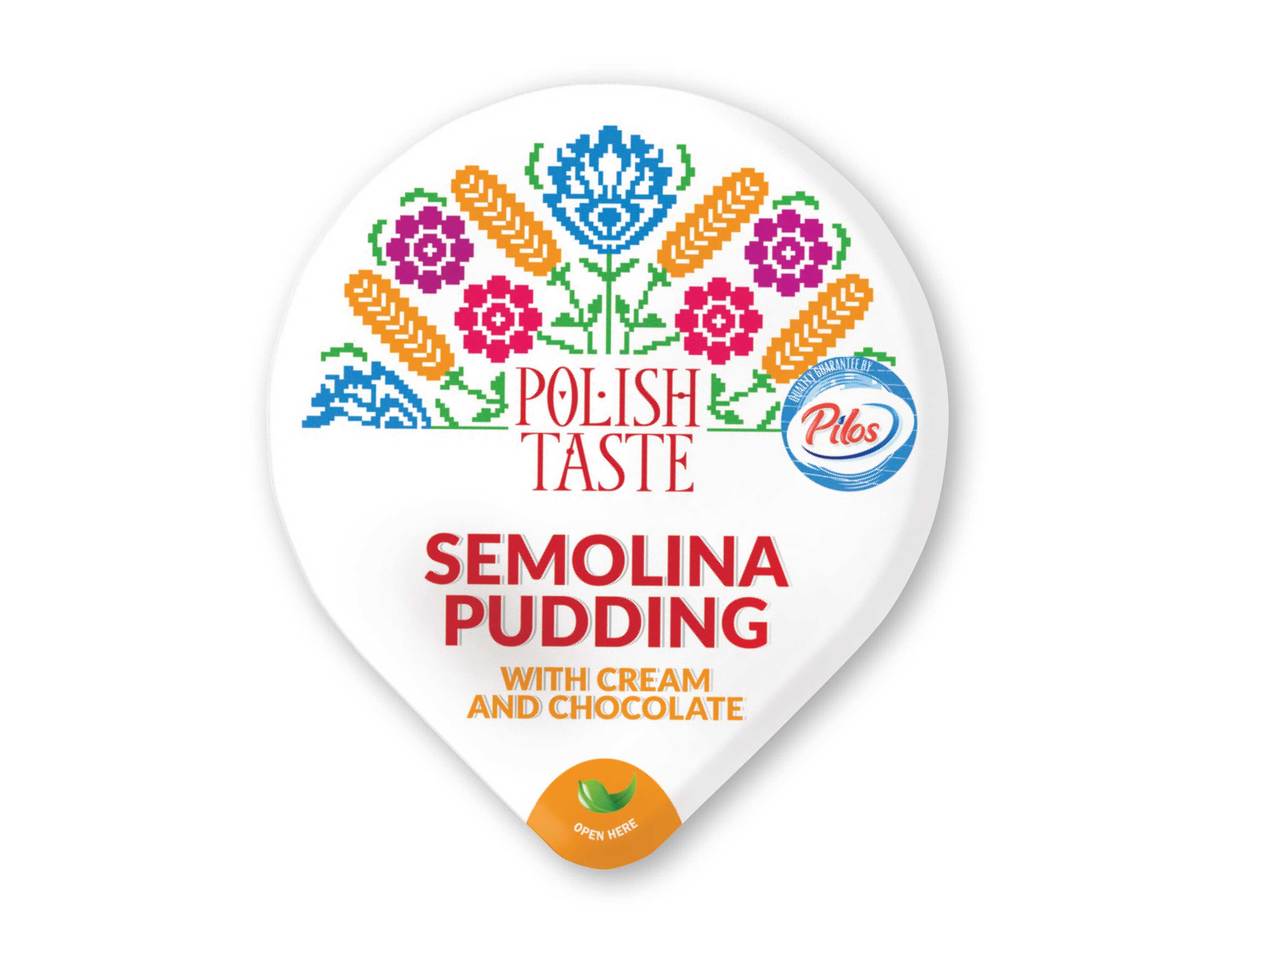 OLISH TASTE Semolina Pudding with Cream & Chocolate